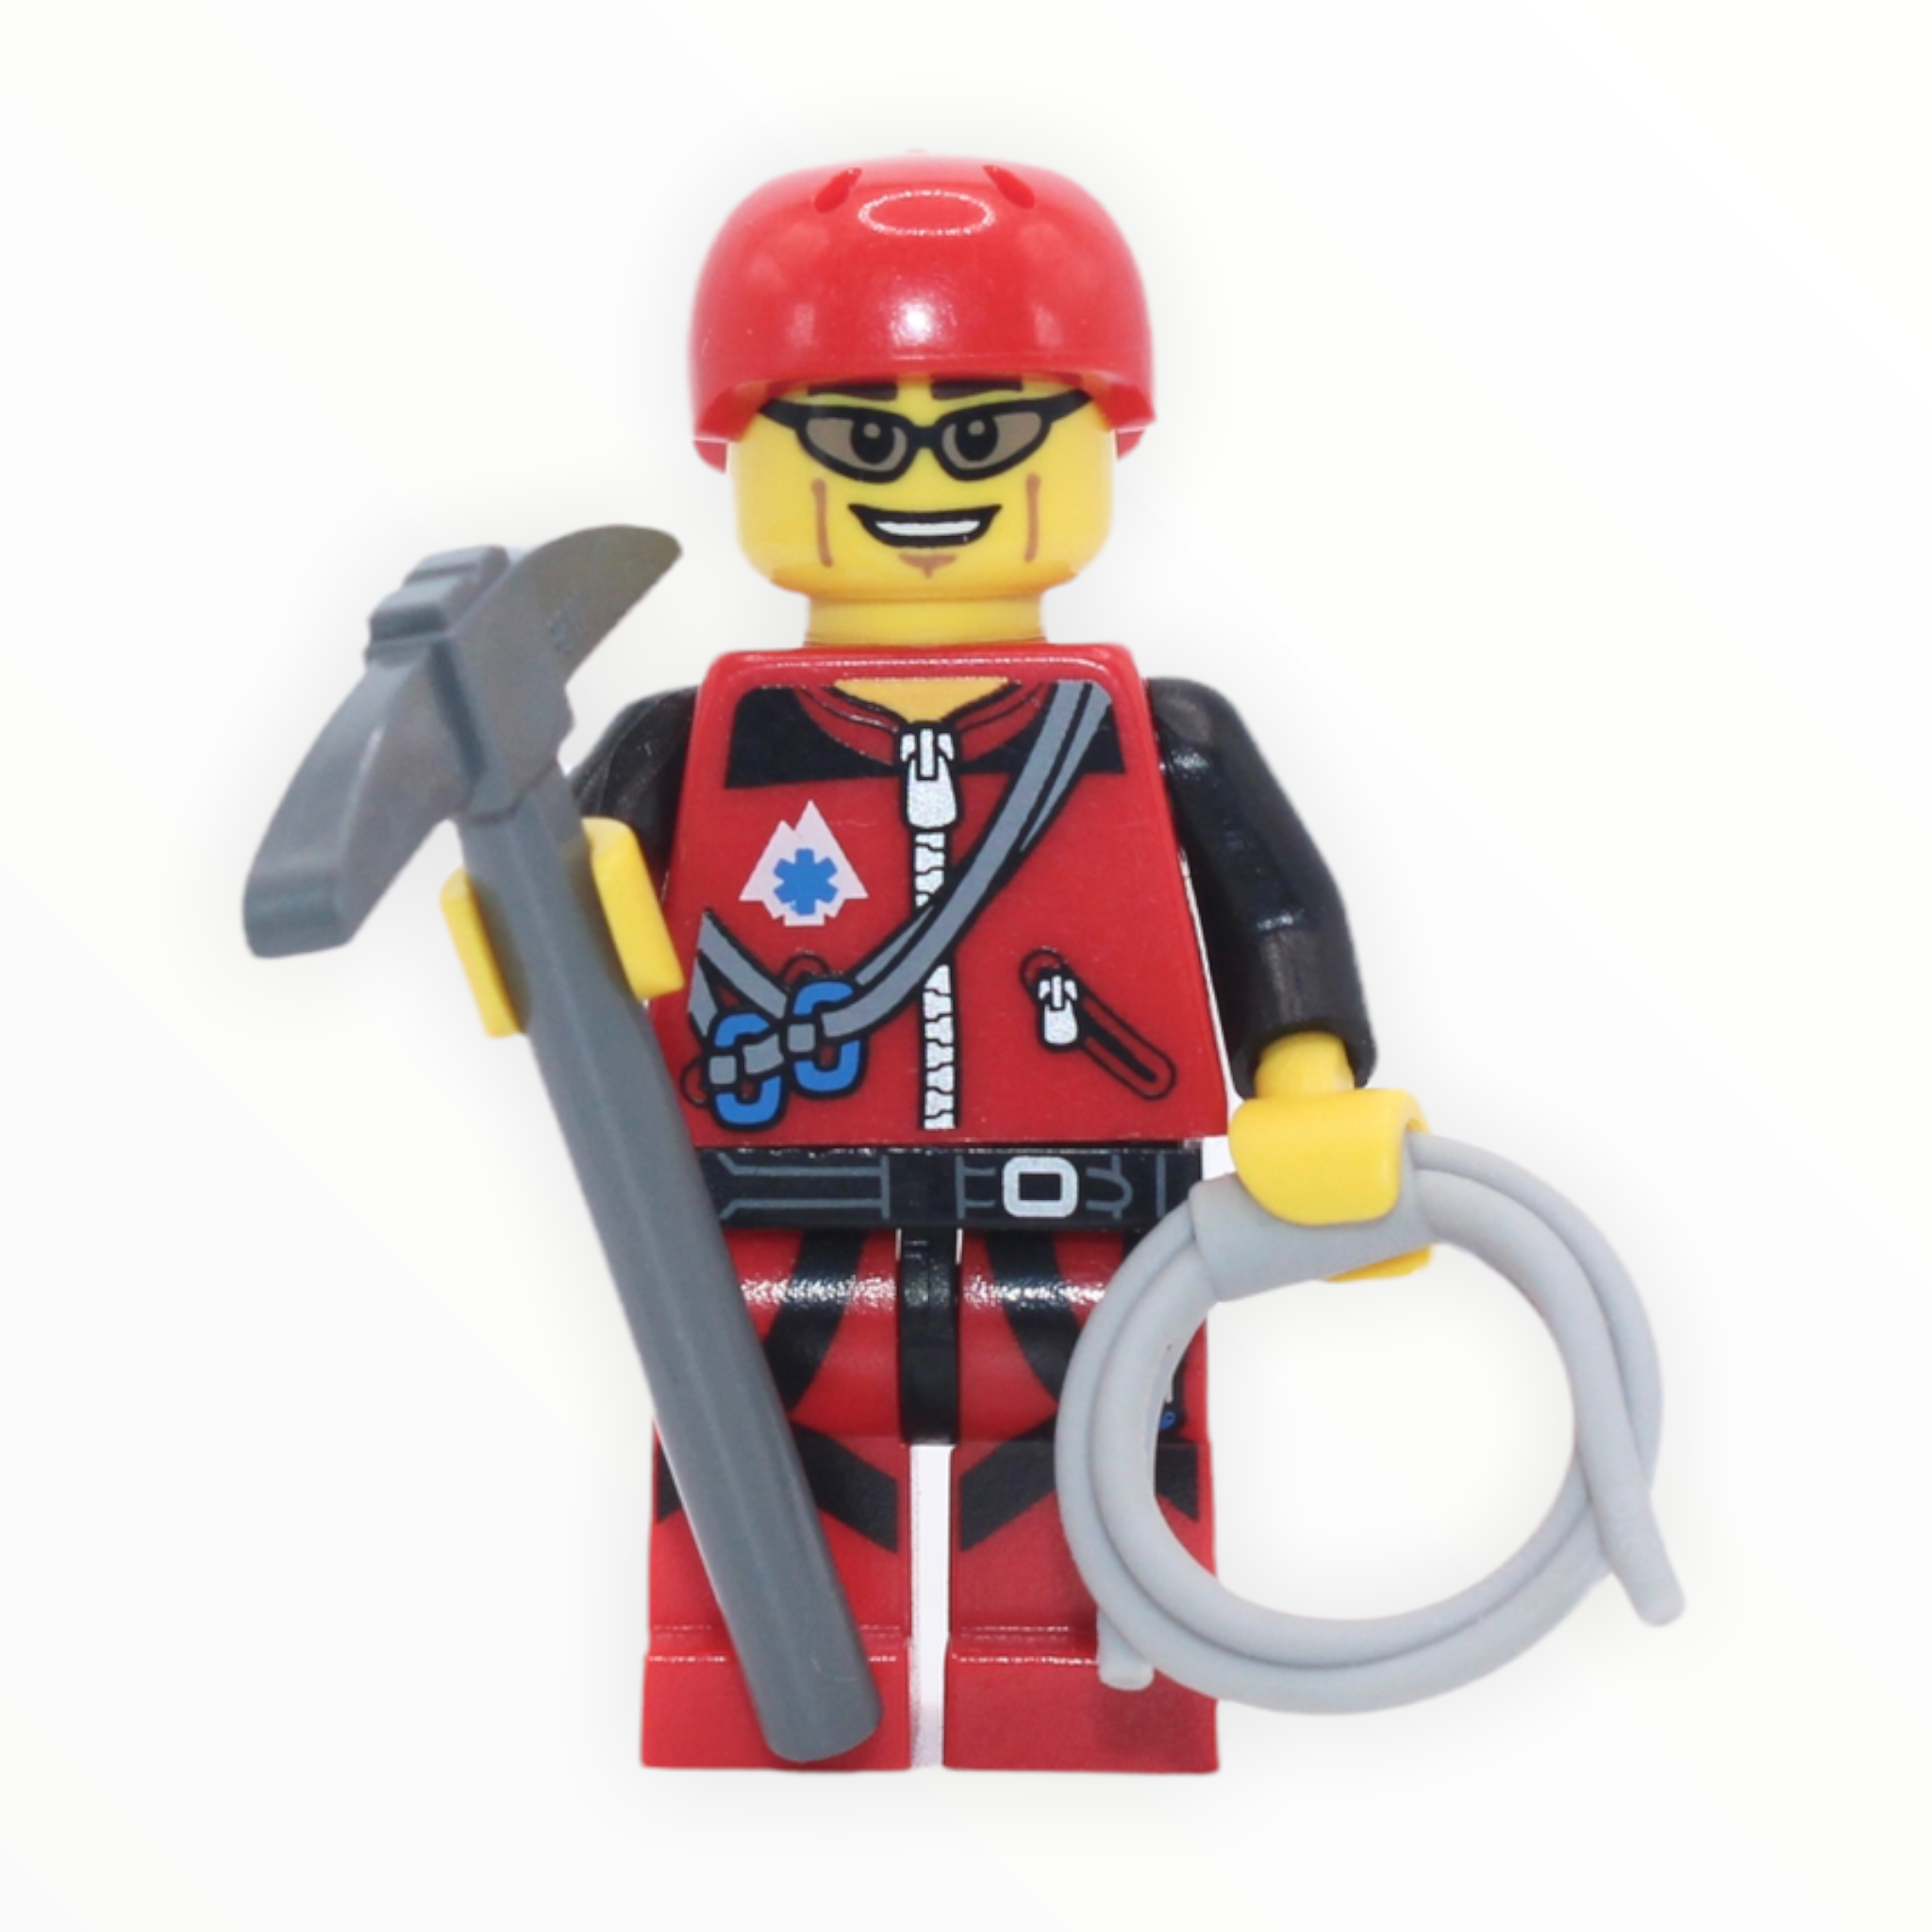 LEGO Series 11: Mountain Climber